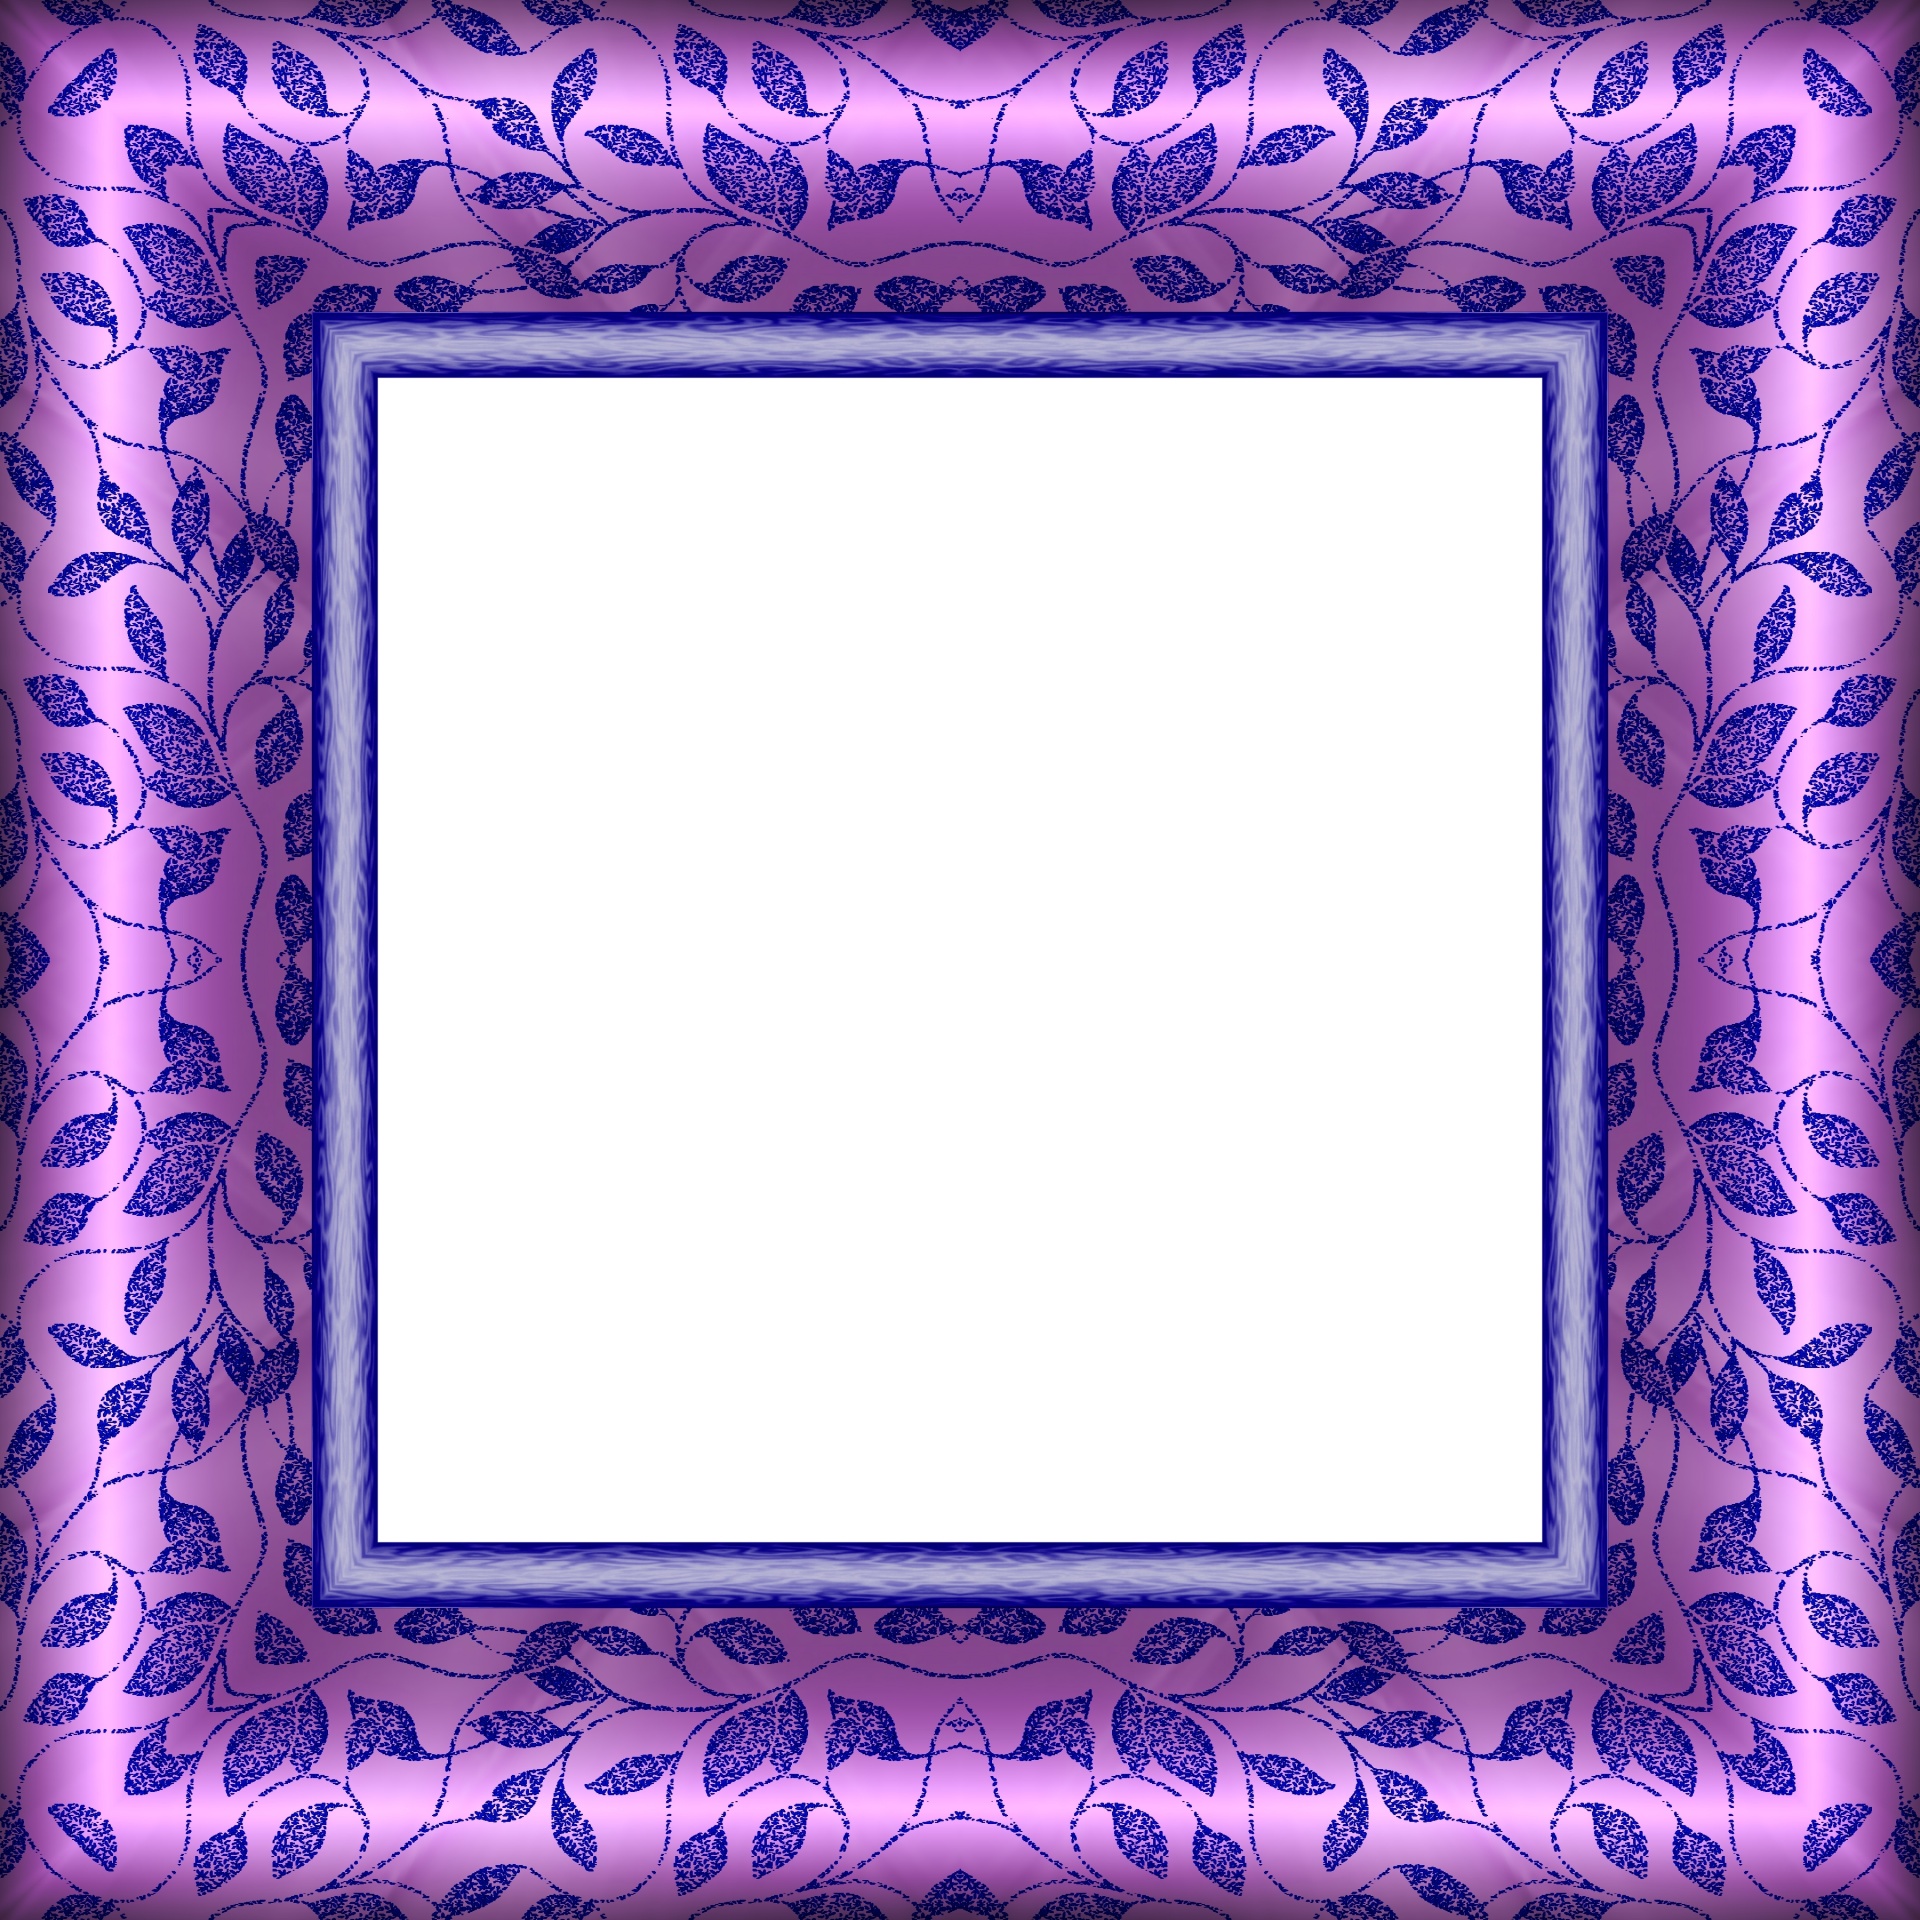 satin-pattern-picture-frame-purple-free-stock-photo-public-domain